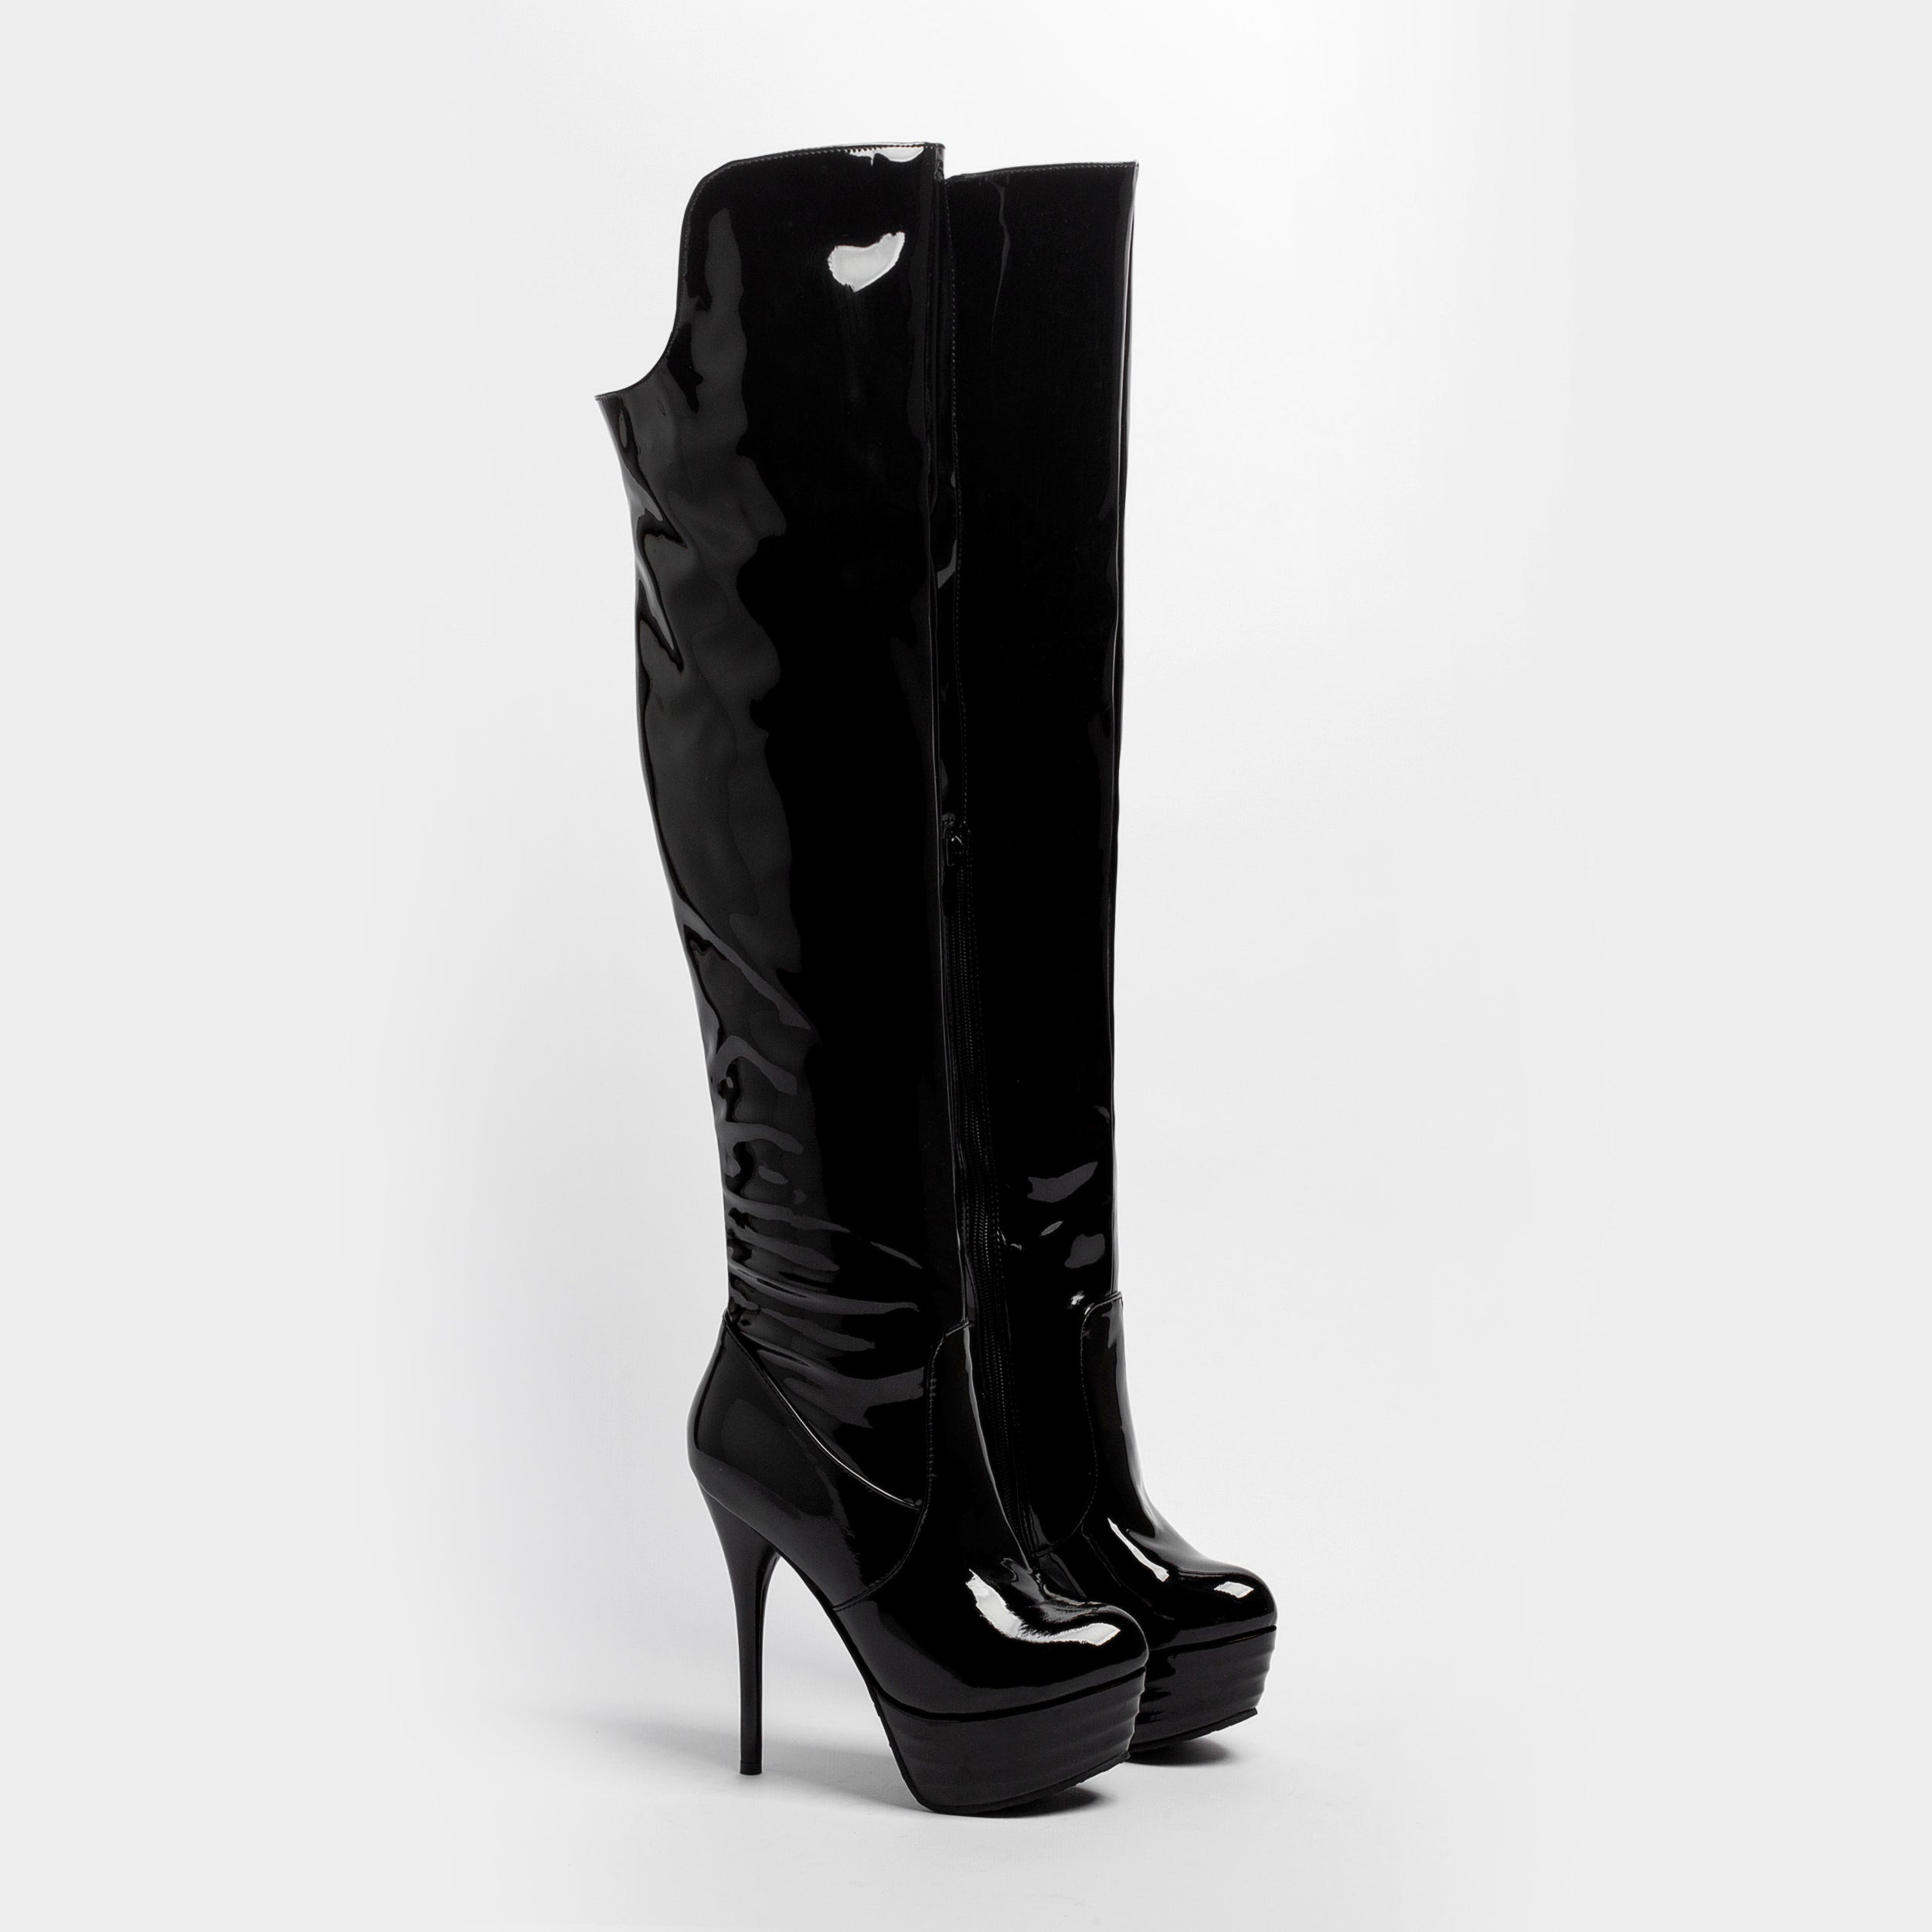 Bigsizeheels Waterproof covered knee-high heel boots - Black freeshipping - bigsizeheel®-size5-size15 -All Plus Sizes Available!